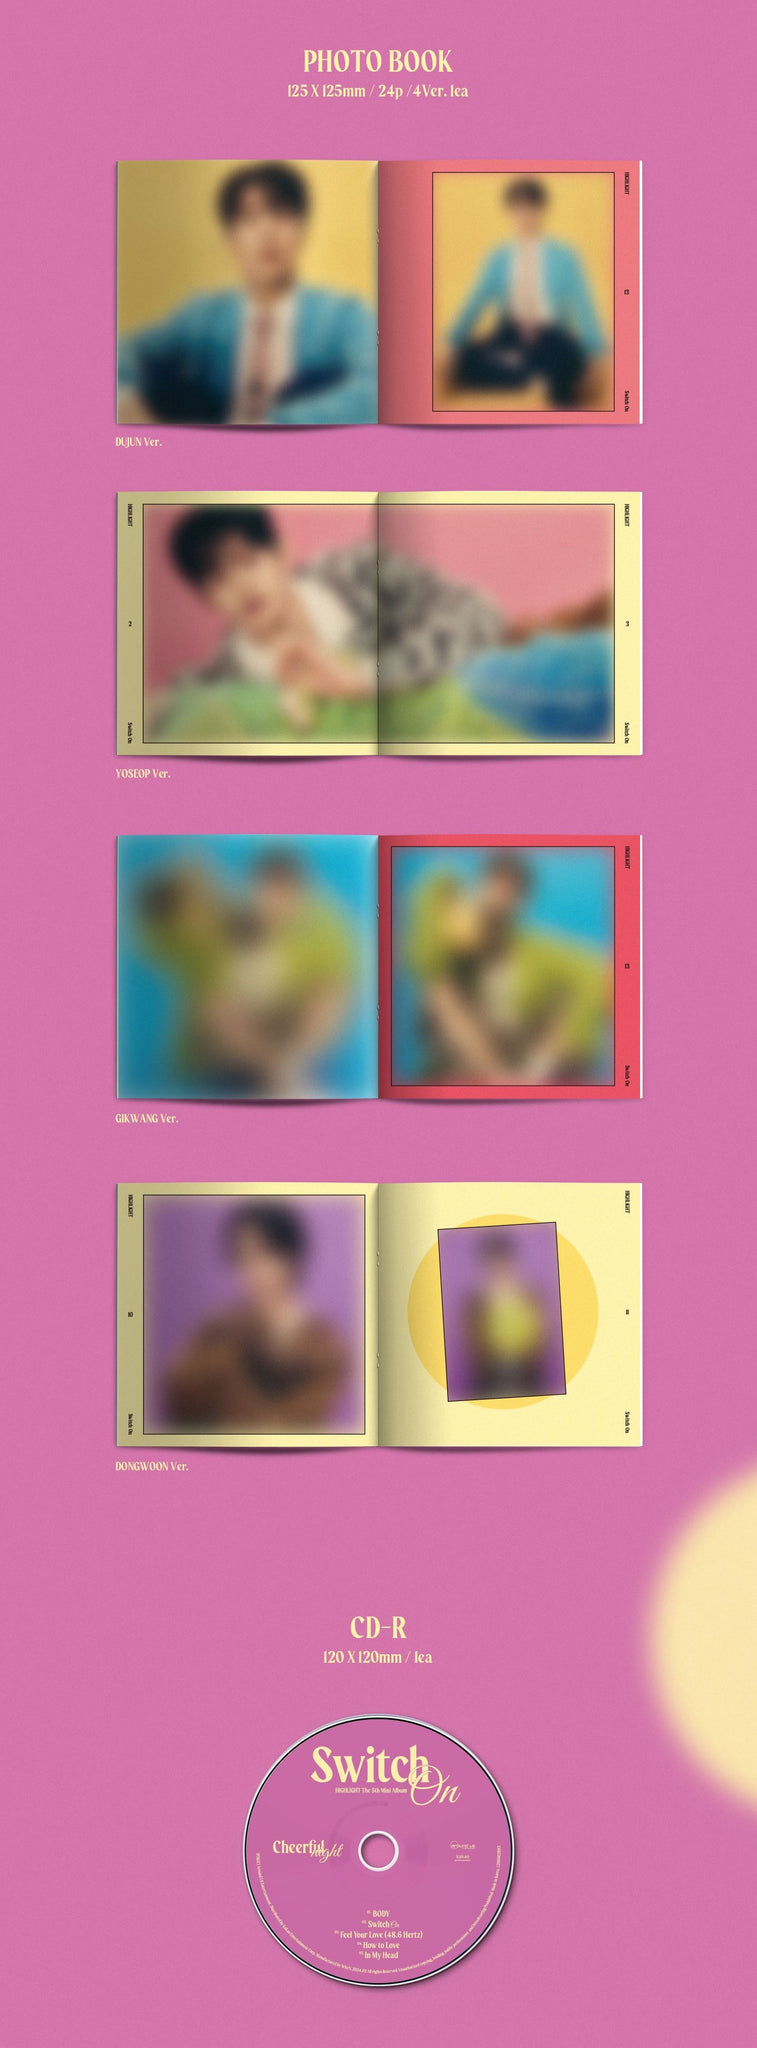 HIGHLIGHT 5th Mini Album Switch On - Digipack Version Inclusions Photobook, CD